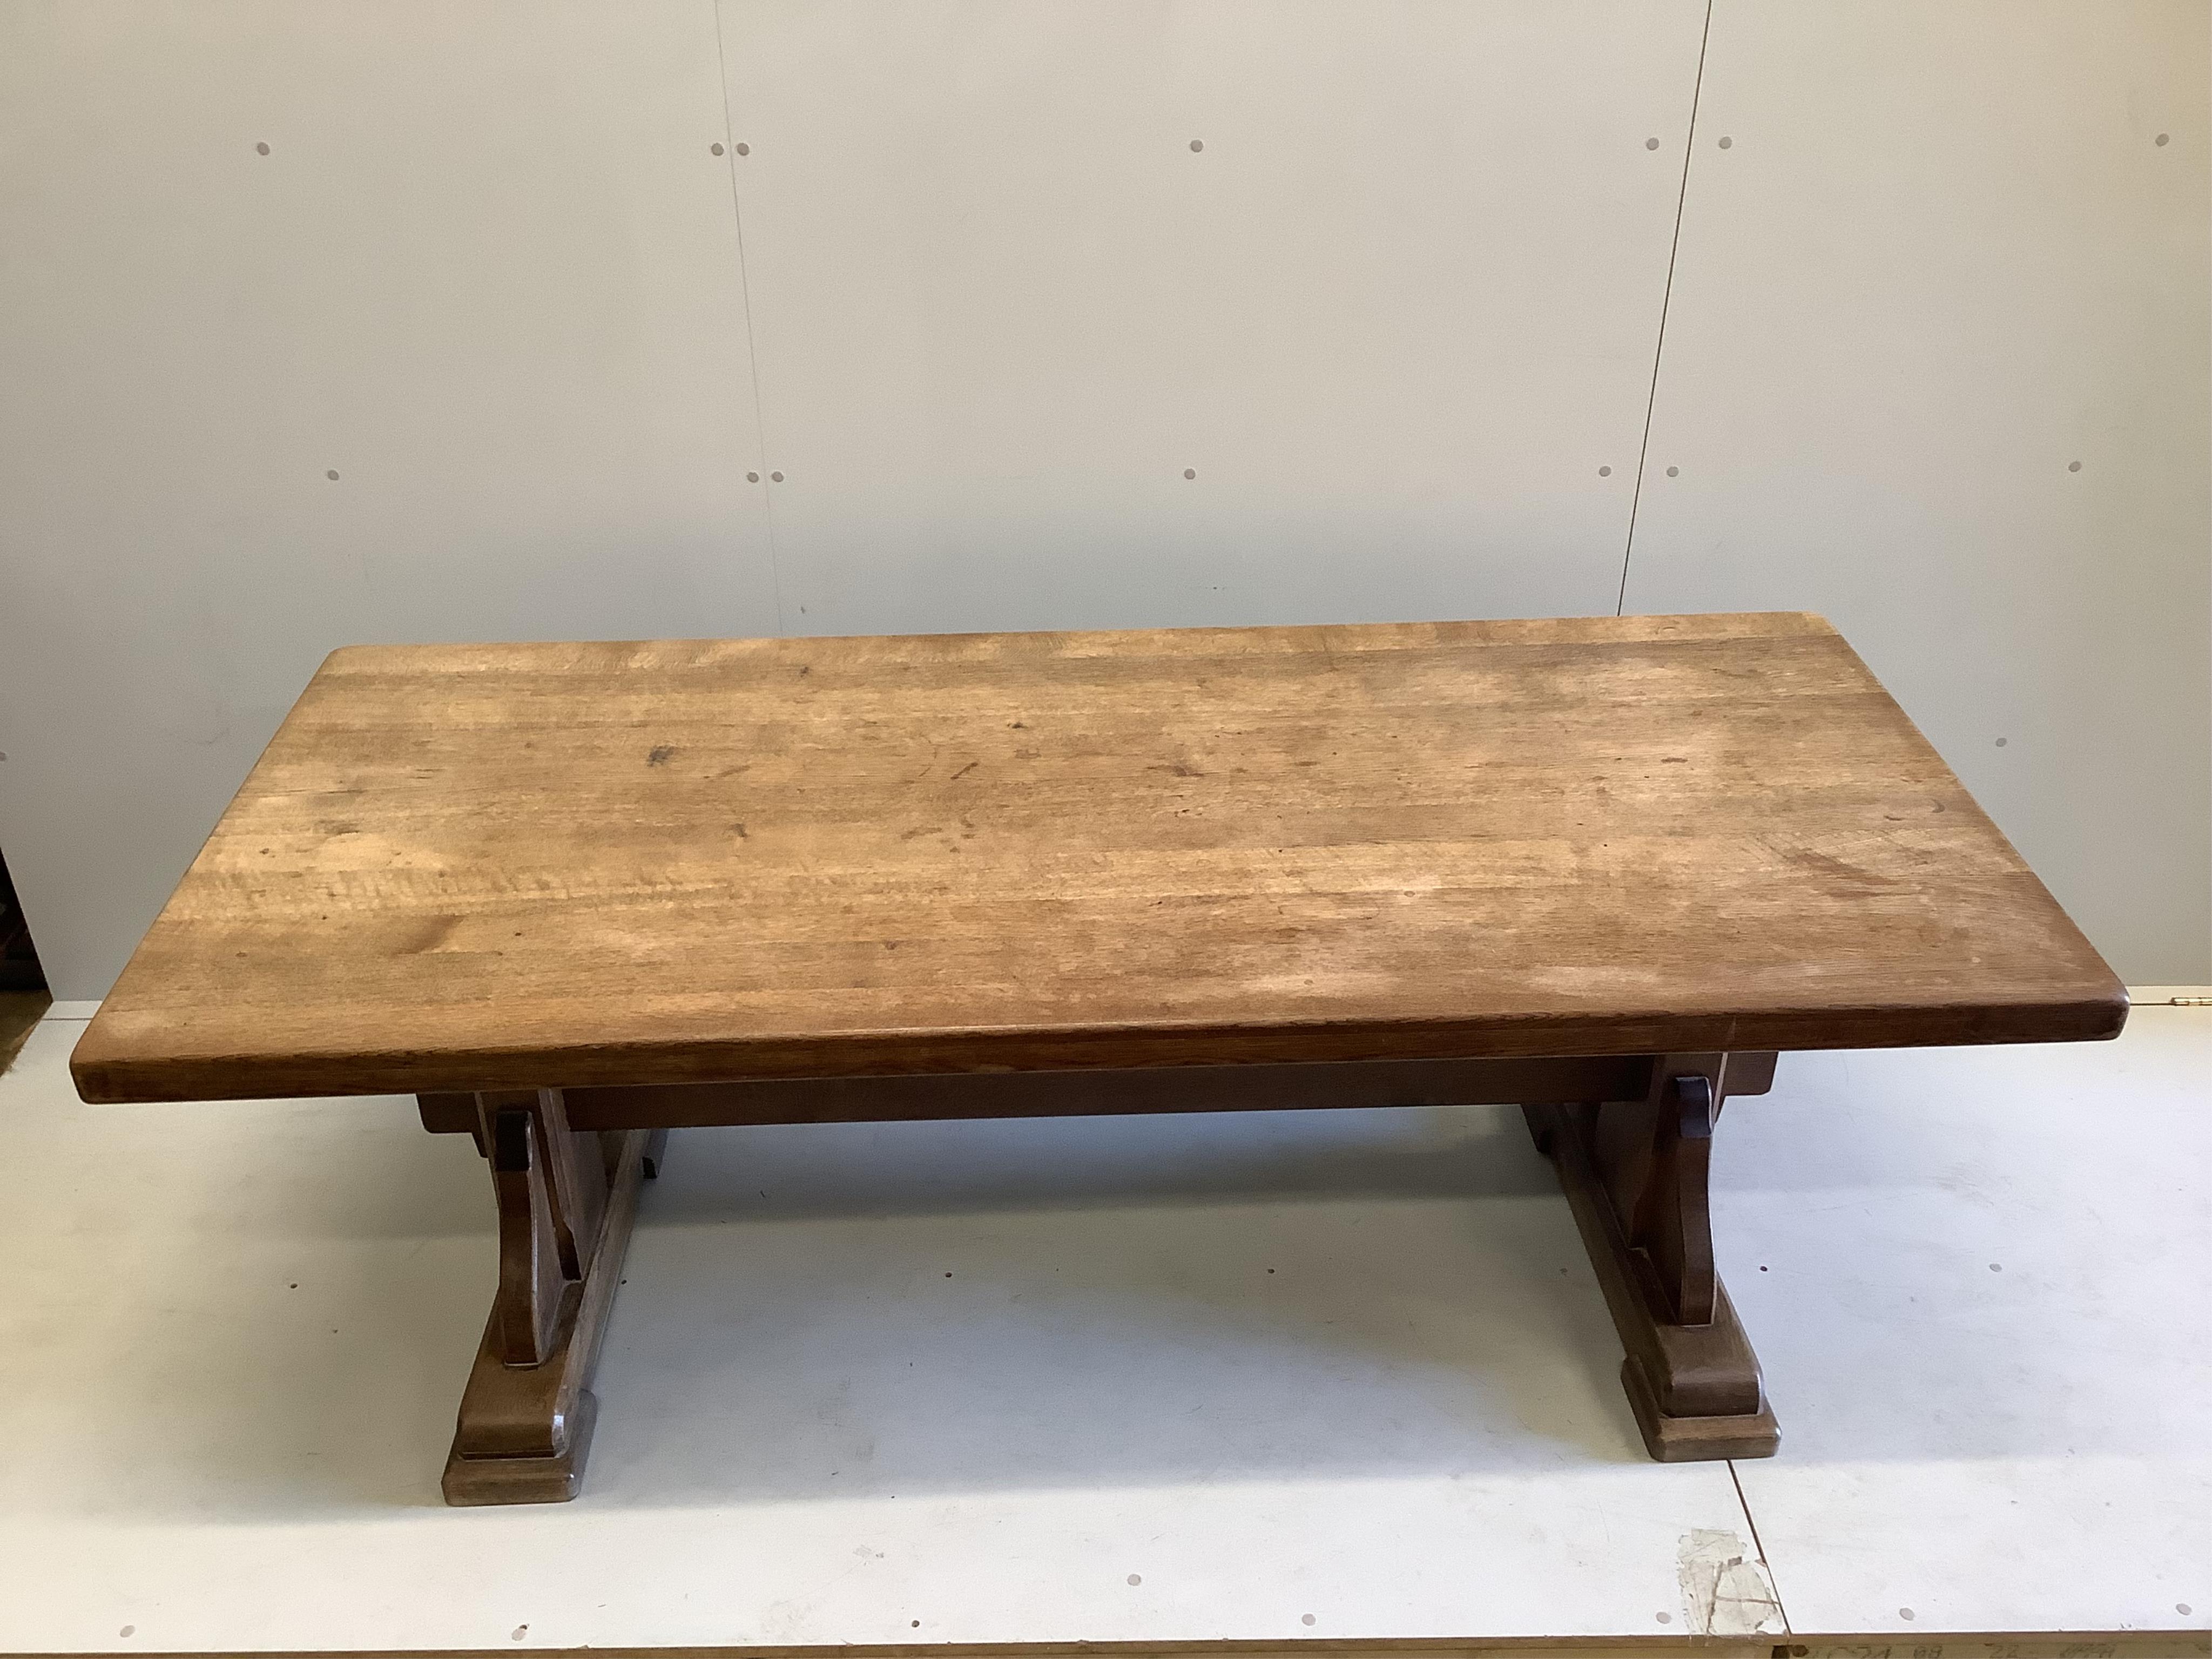 An 18th century style rectangular oak refectory dining table, width 200cm, depth 89cm, height 75cm. Condition - fair